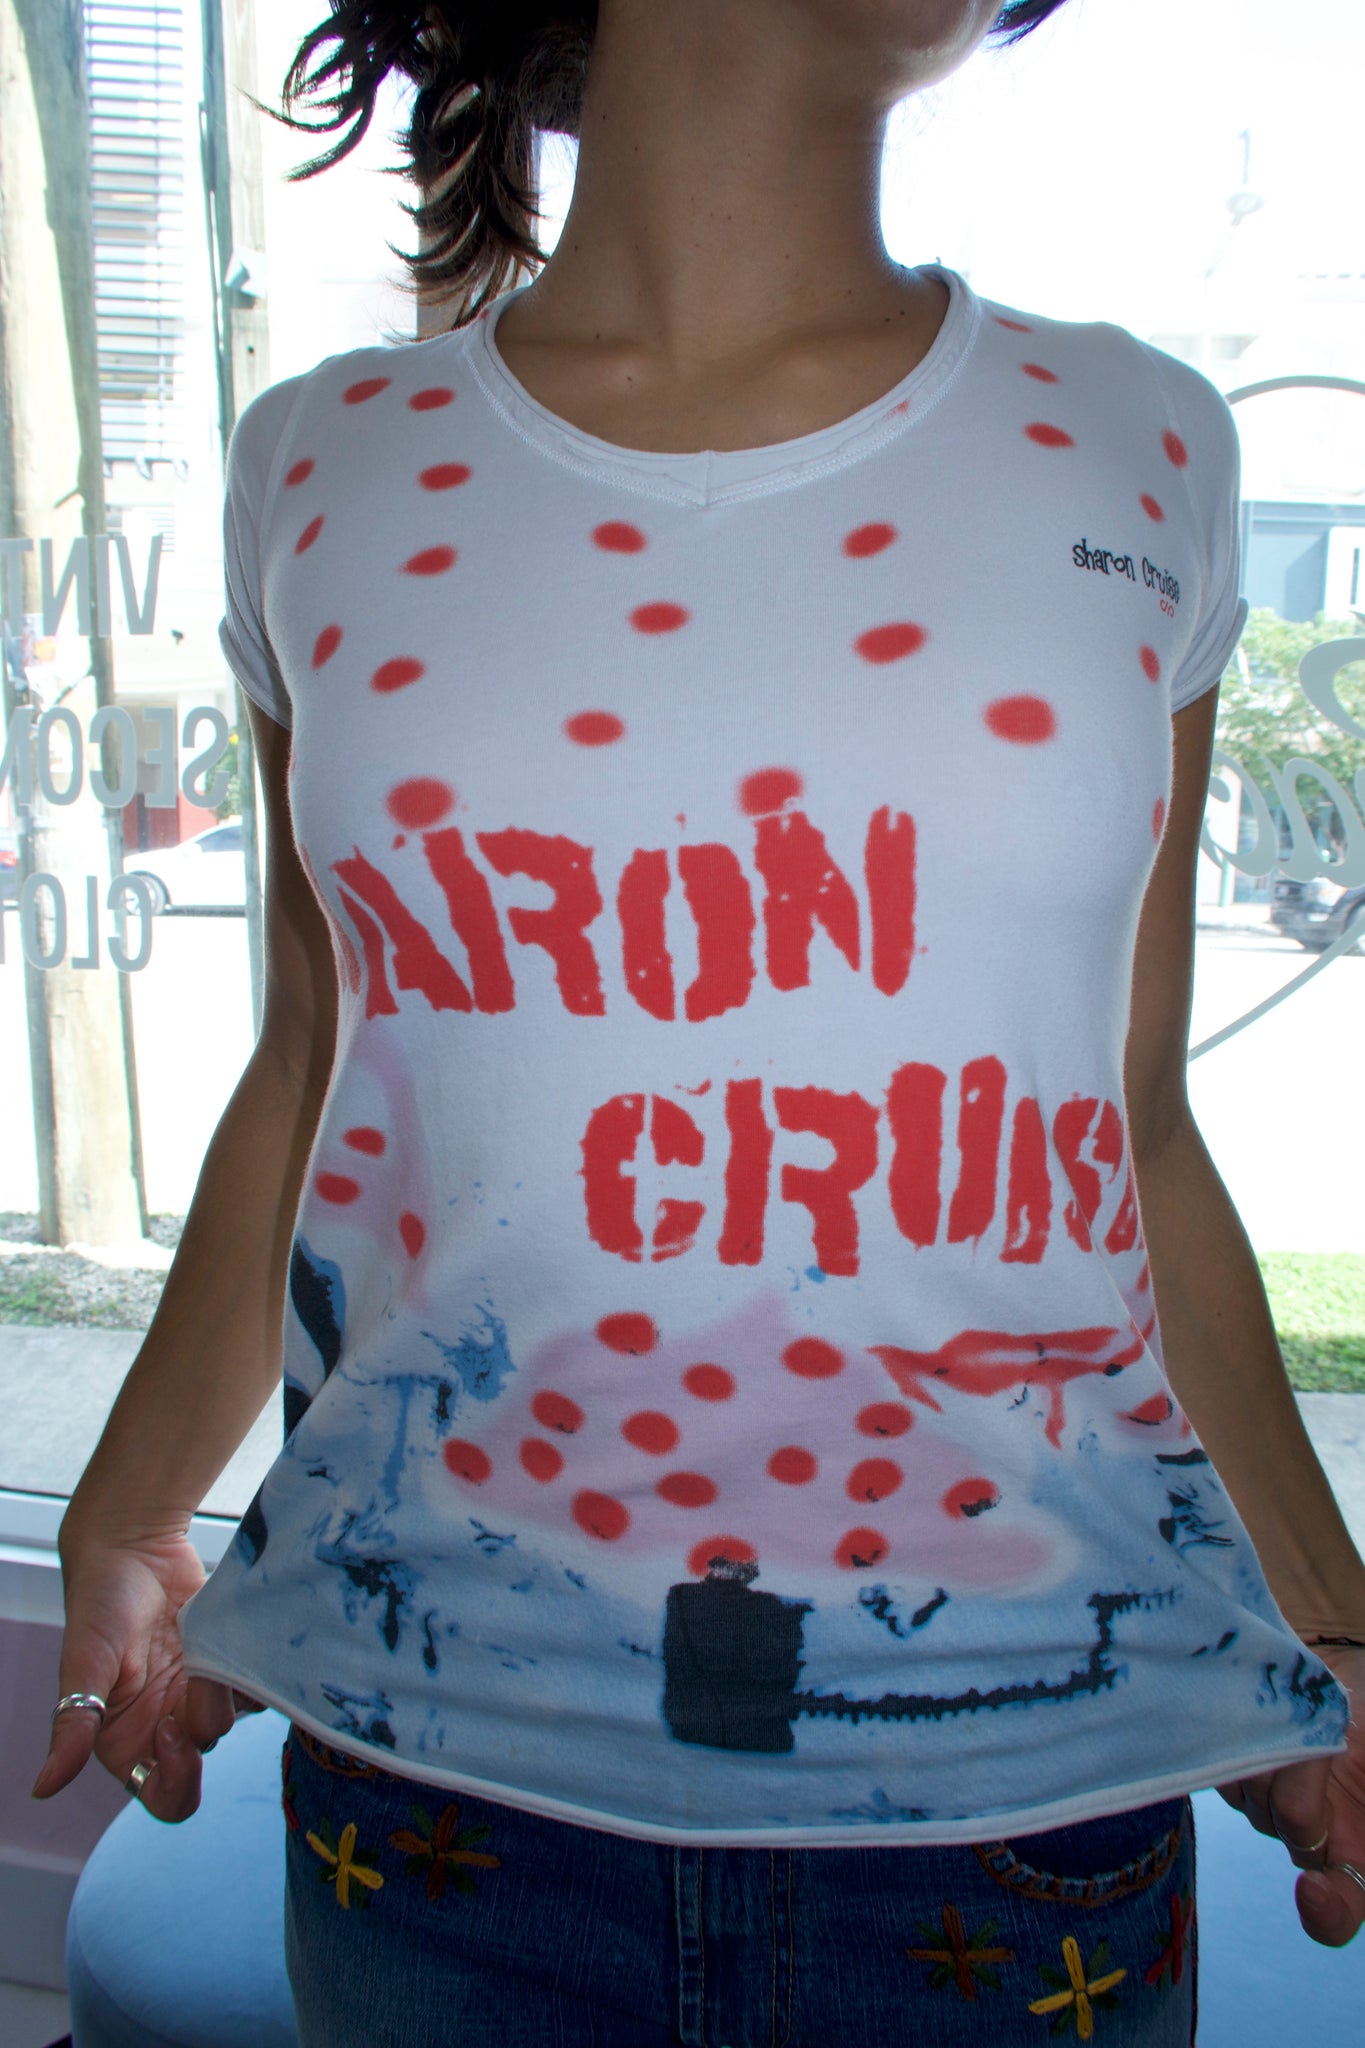 "Sharon Cruise" T Shirt